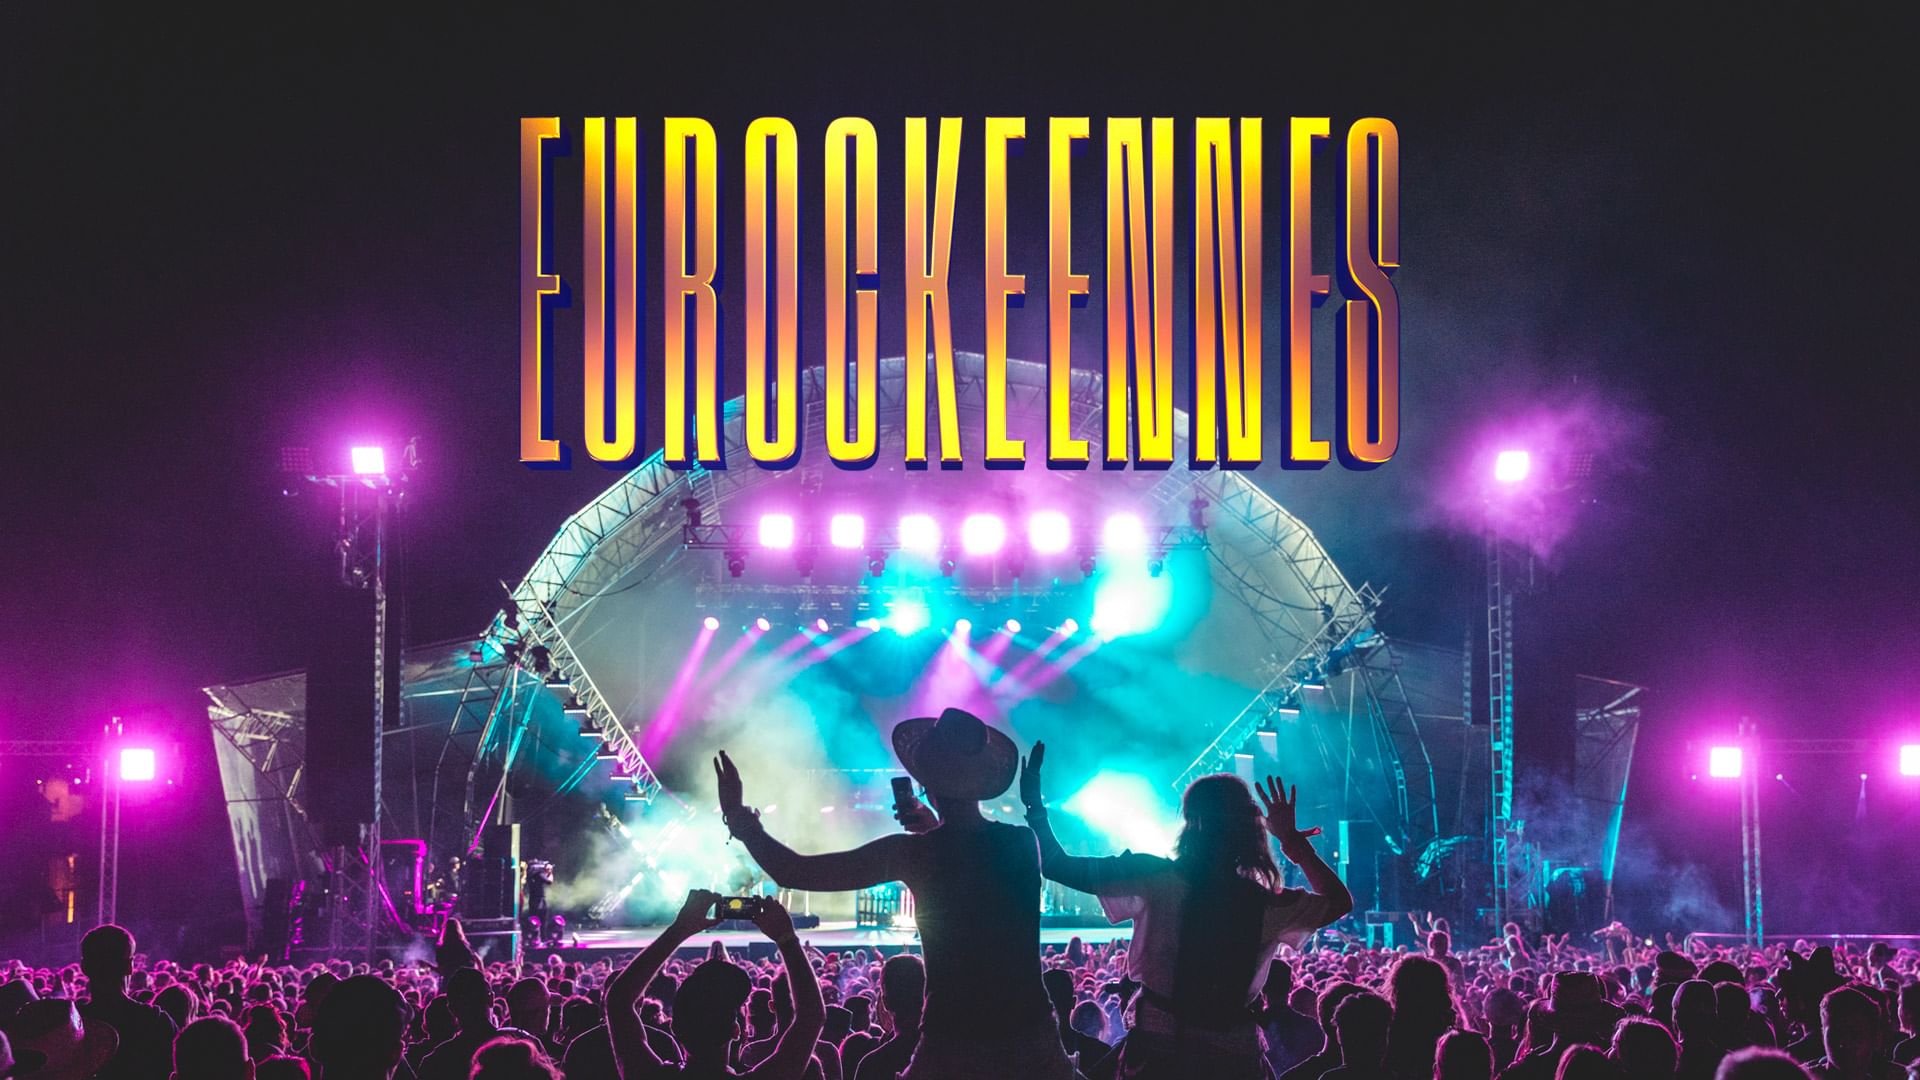 Eurockéennes Festival - ARTE Concert | ARTE in English